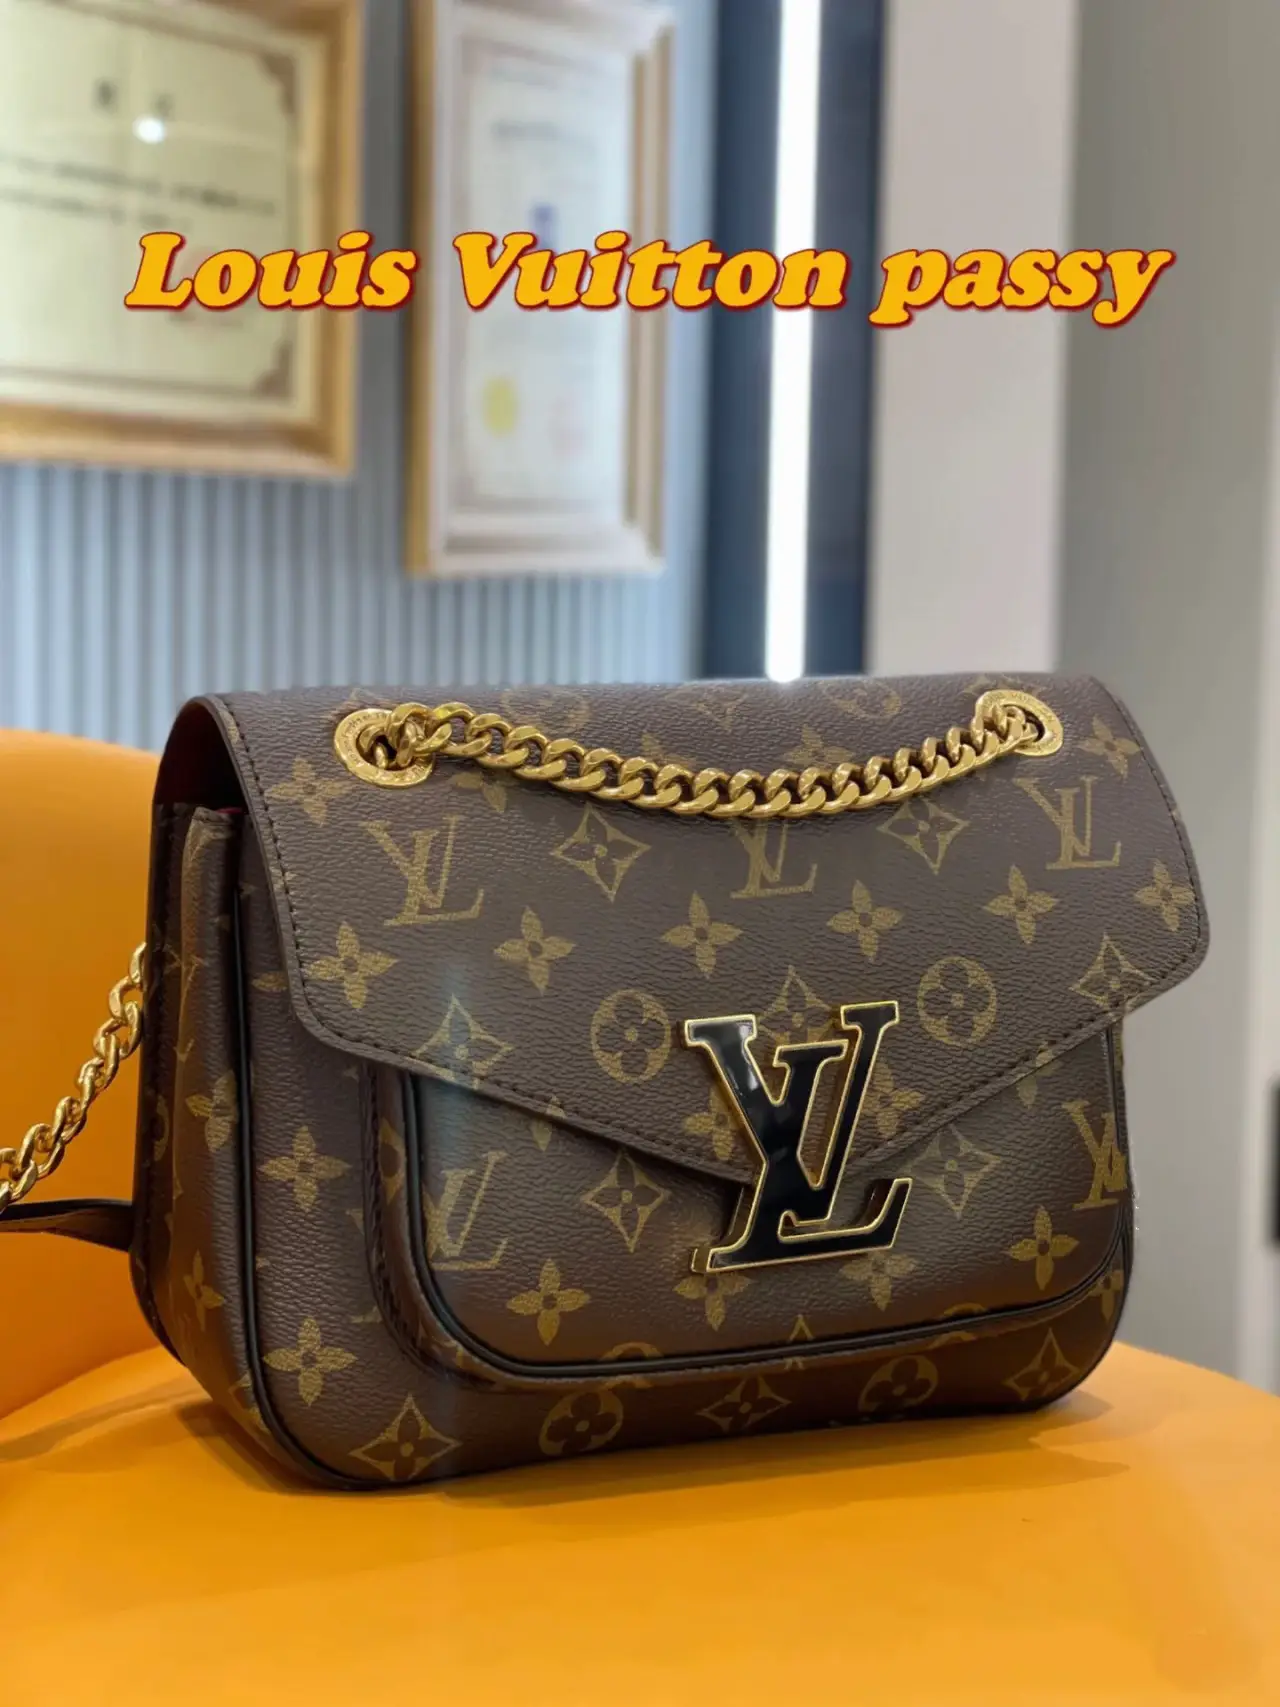 Honest LV Passy Bag Review 